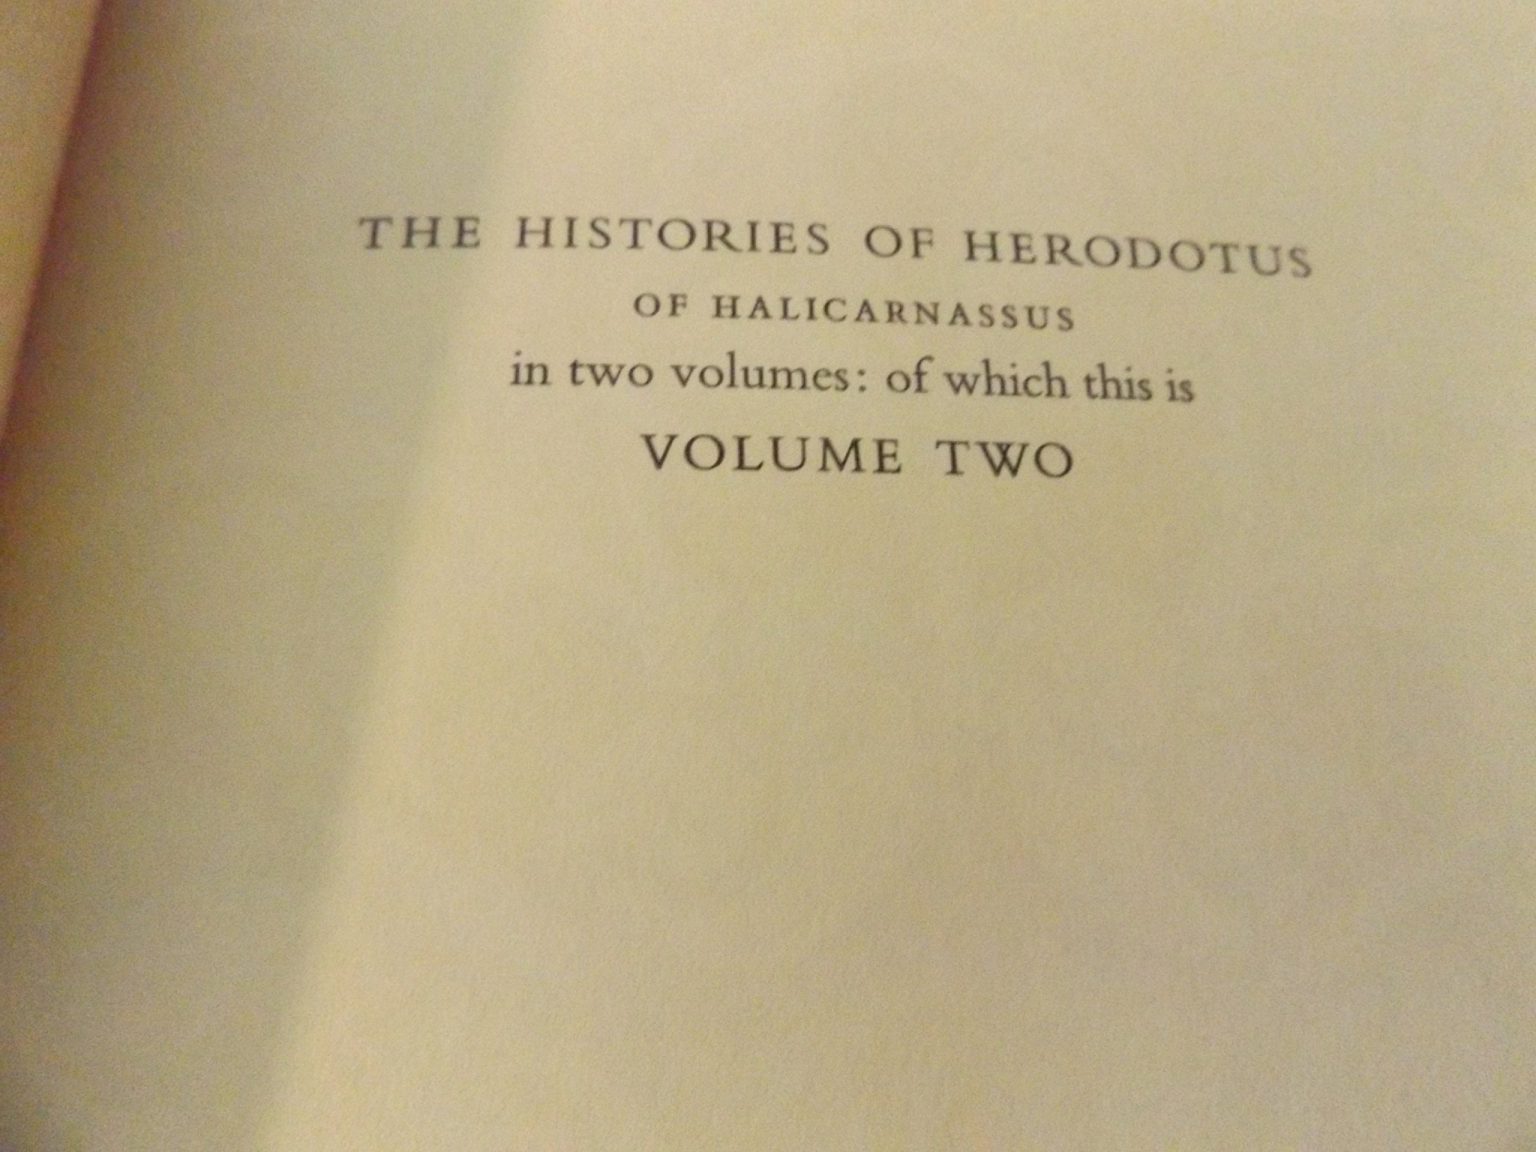 the book of herodotus